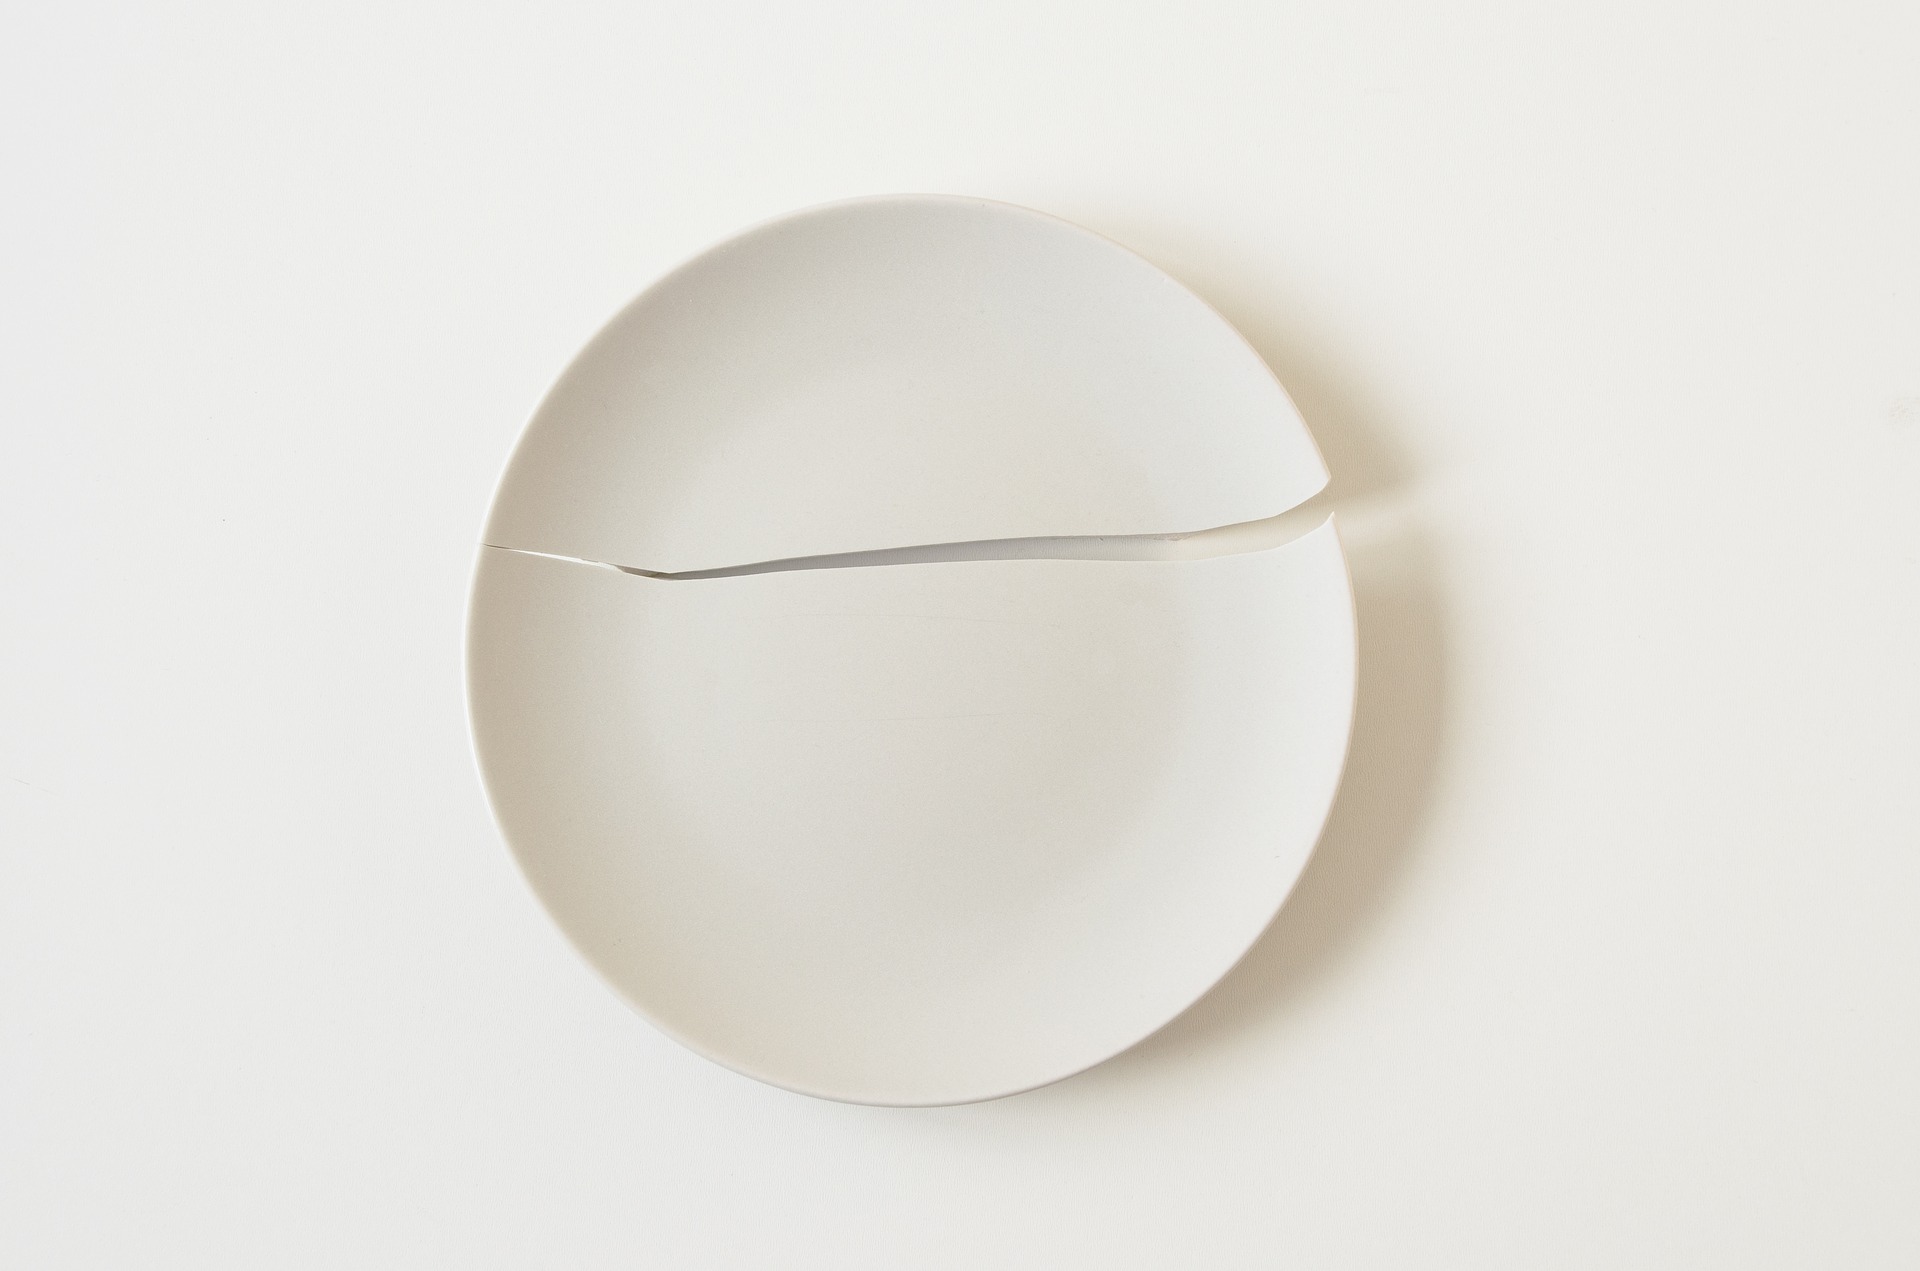  Broken white ceramic kitchen plate on white table